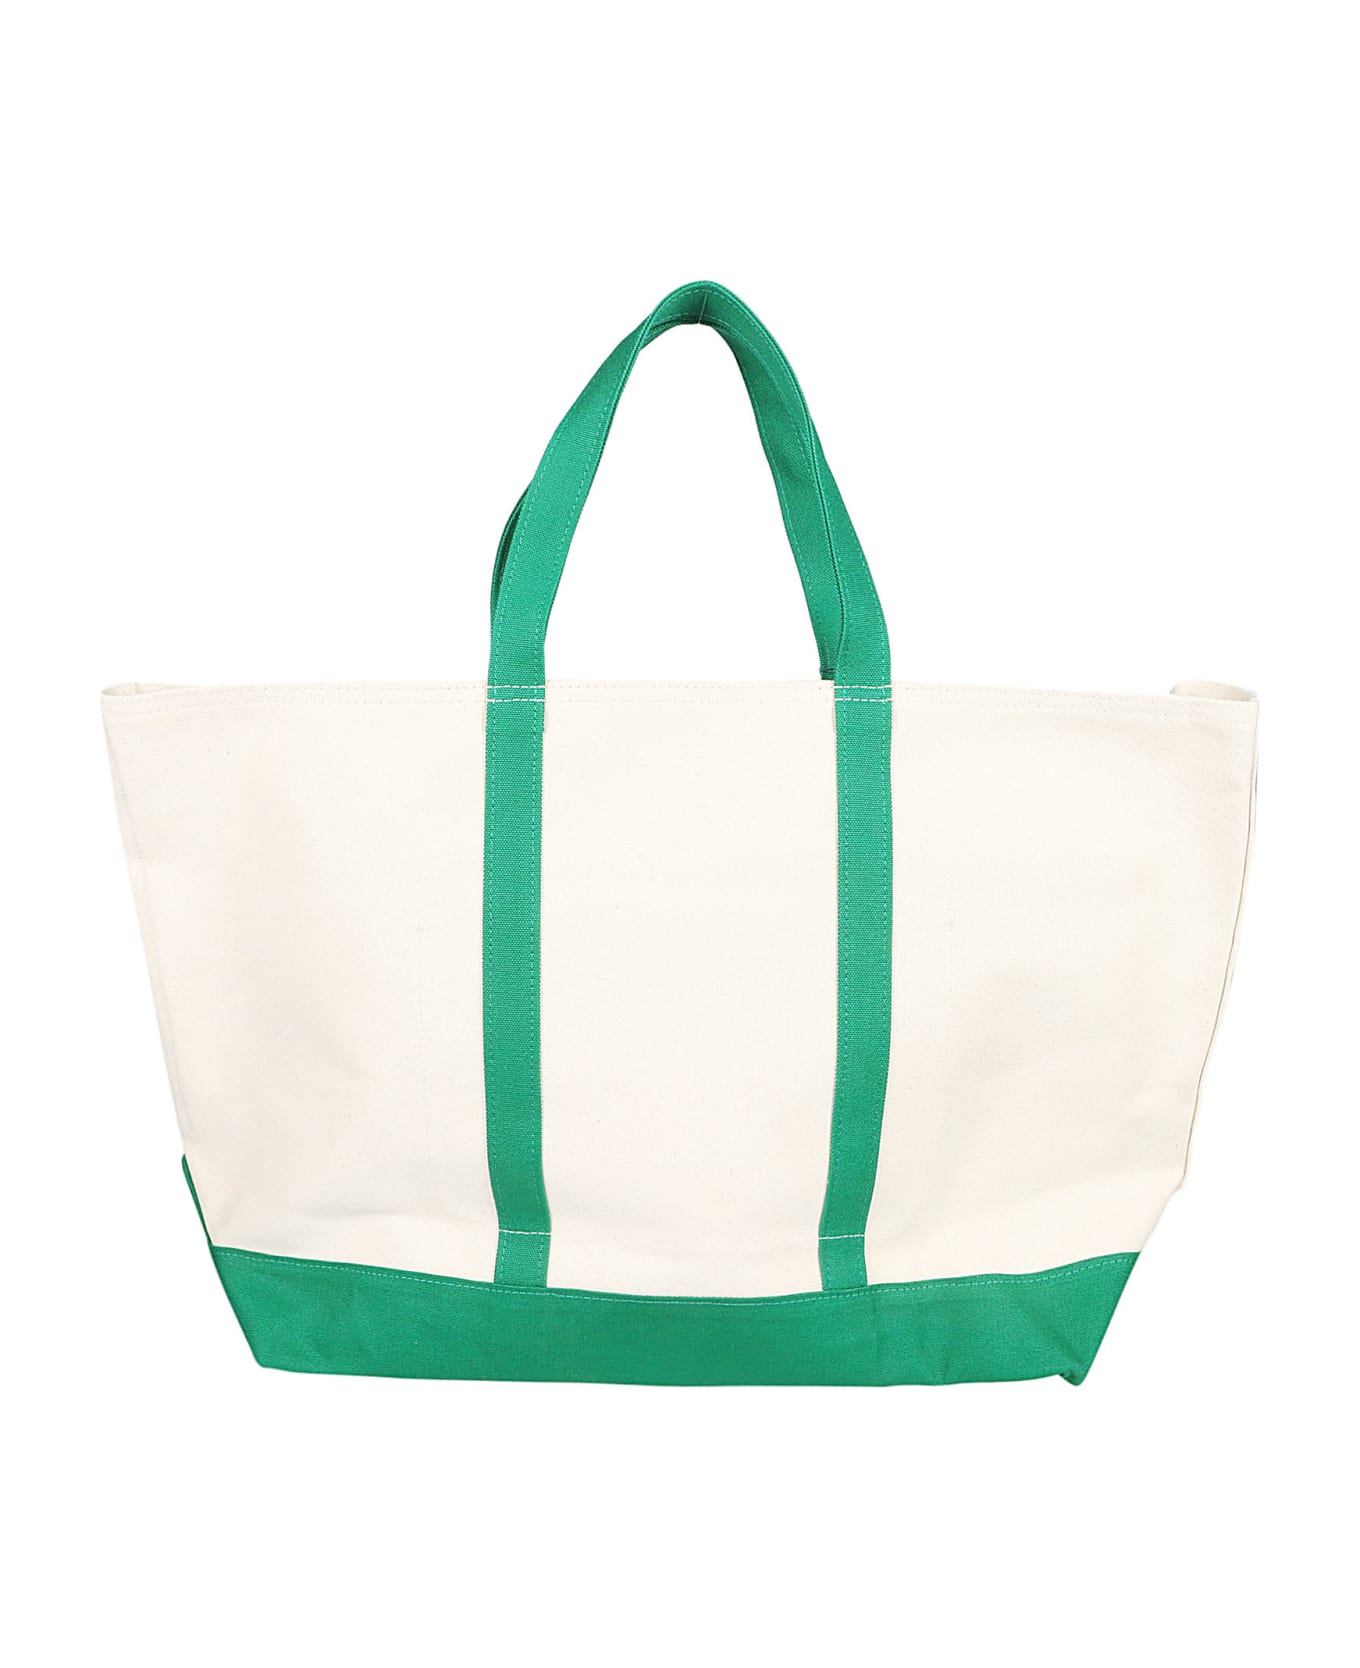 Polo Ralph Lauren Icon Large Tote Bag - Hillside Green/cream トートバッグ